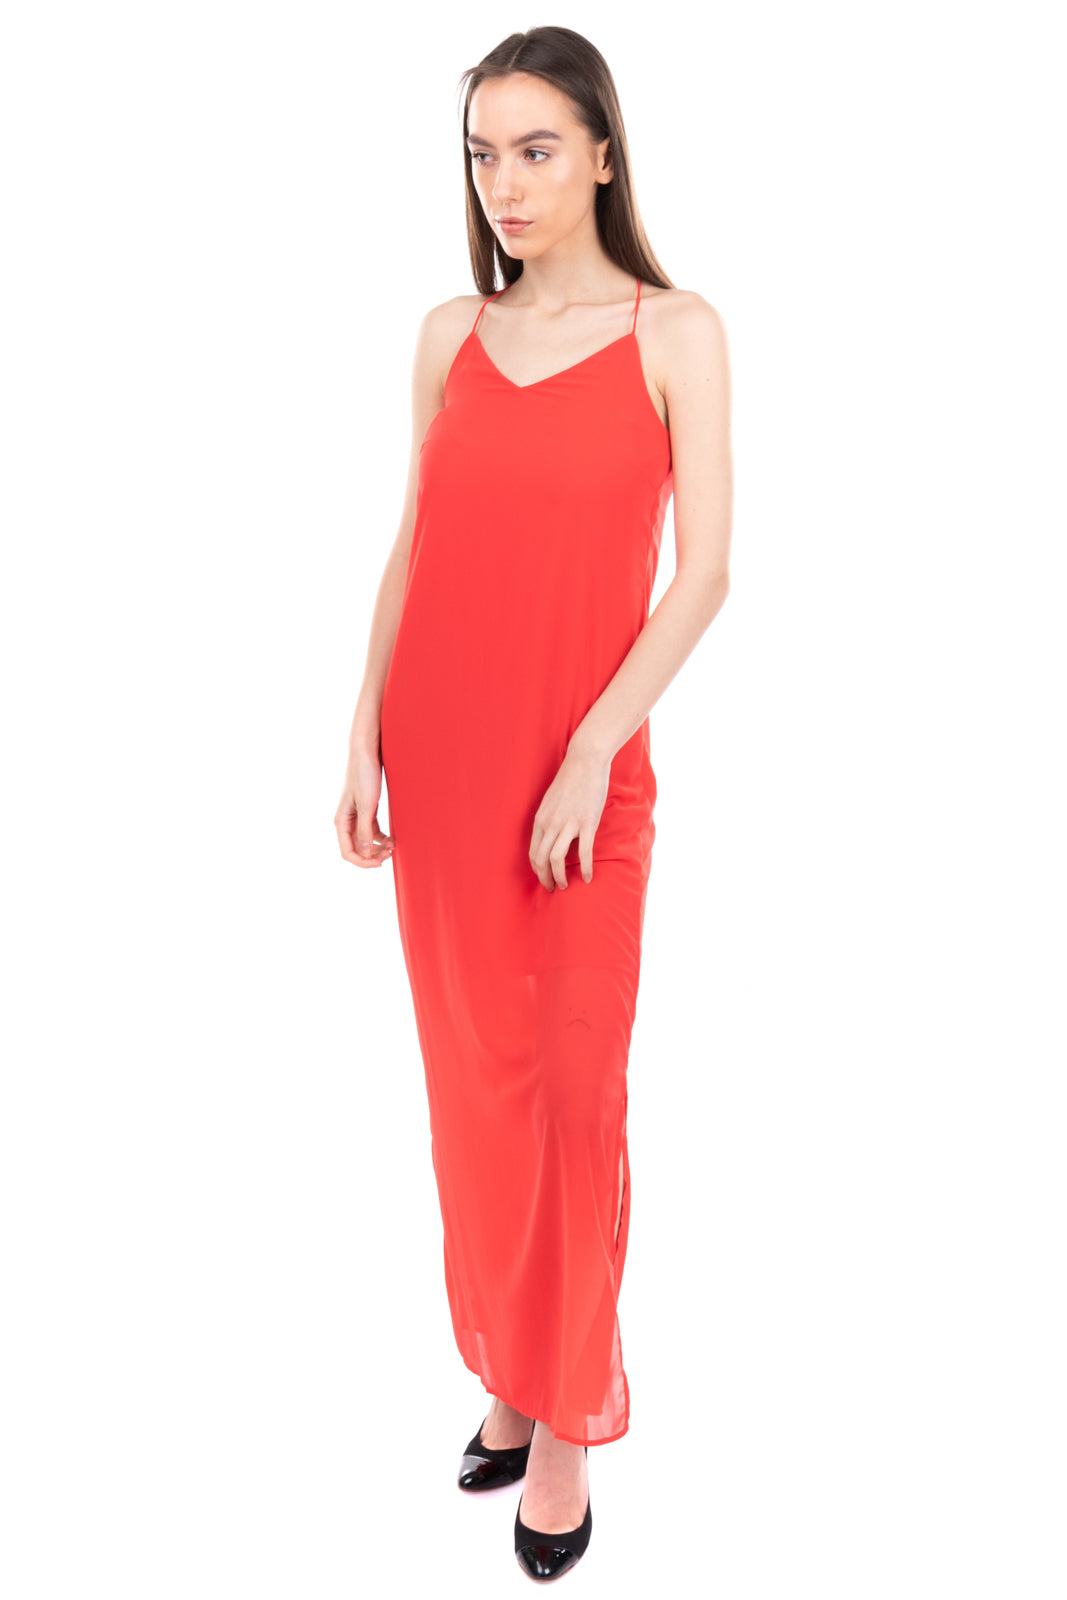 VERO MODA Maxi Overlay Slip Dress Size M Red Slit Side Strappy V Neck gallery main photo